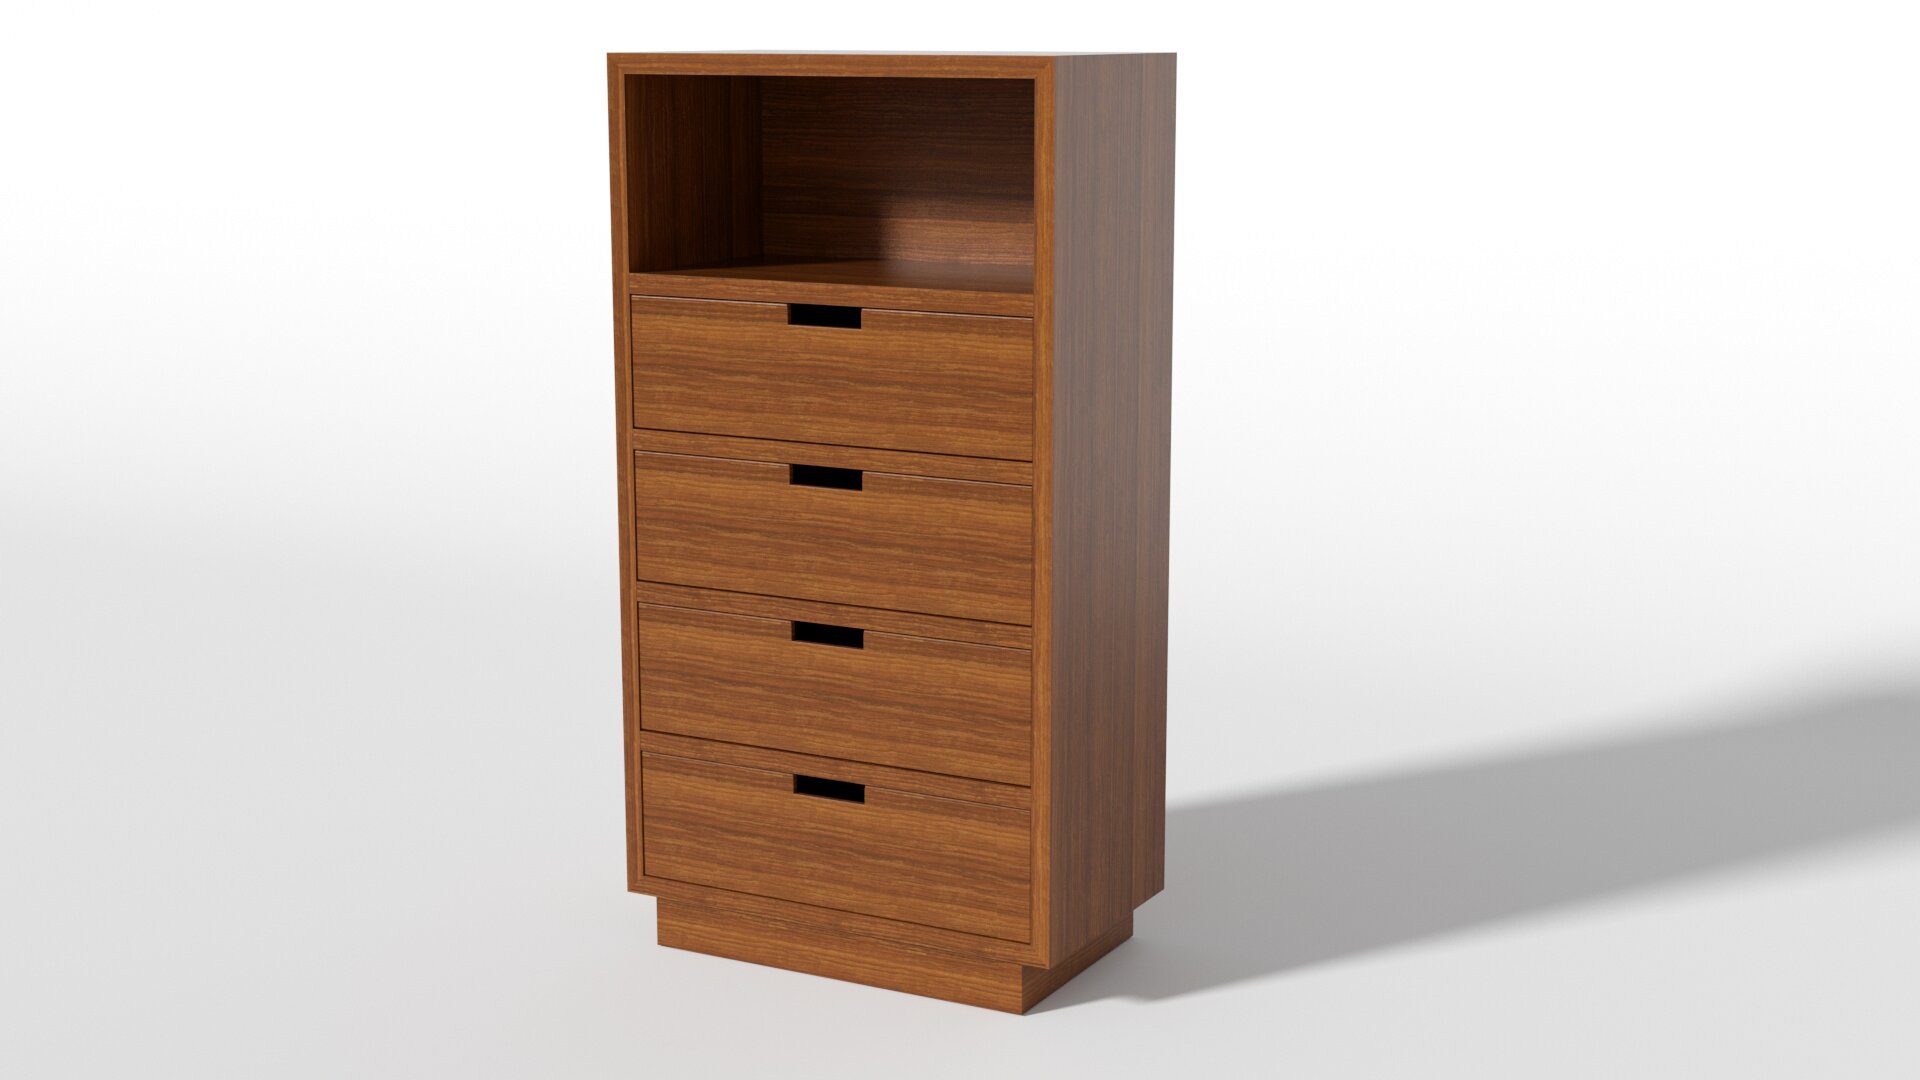 EK_Reedy_Furniture_Single_Bank_Drawer_with_Open_Shelf_Bureau_No_Hardware_Solid_Walnut_Luxury_Modern_Handmade_Furniture.jpg